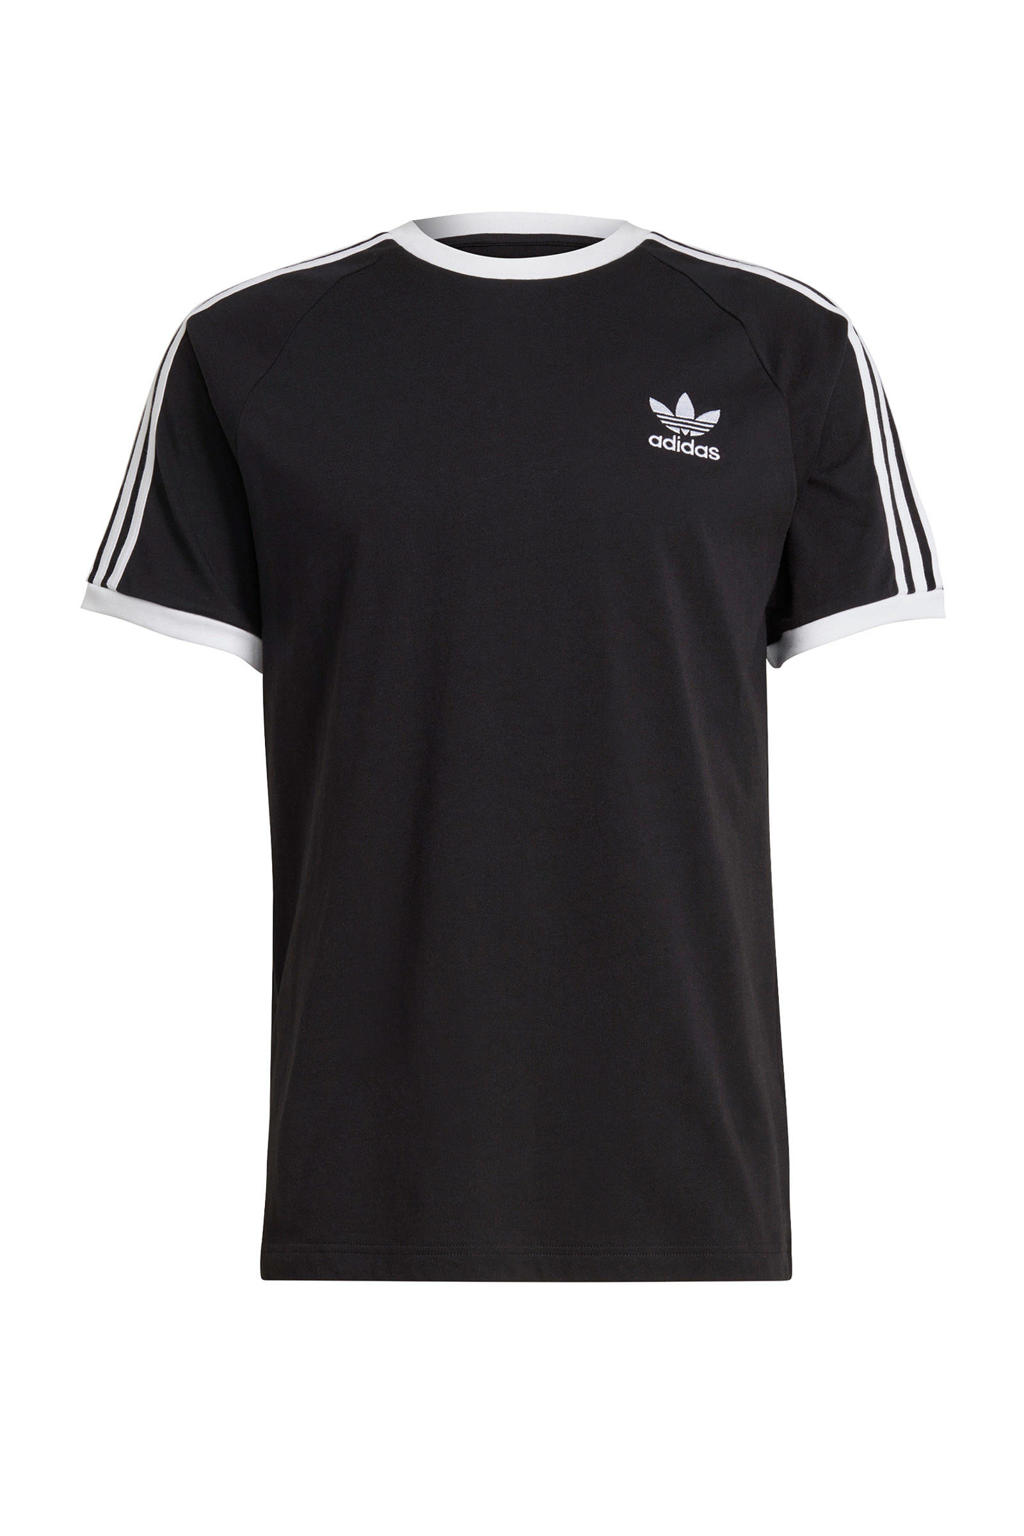 adidas Originals Adicolor T-shirt zwart/wit